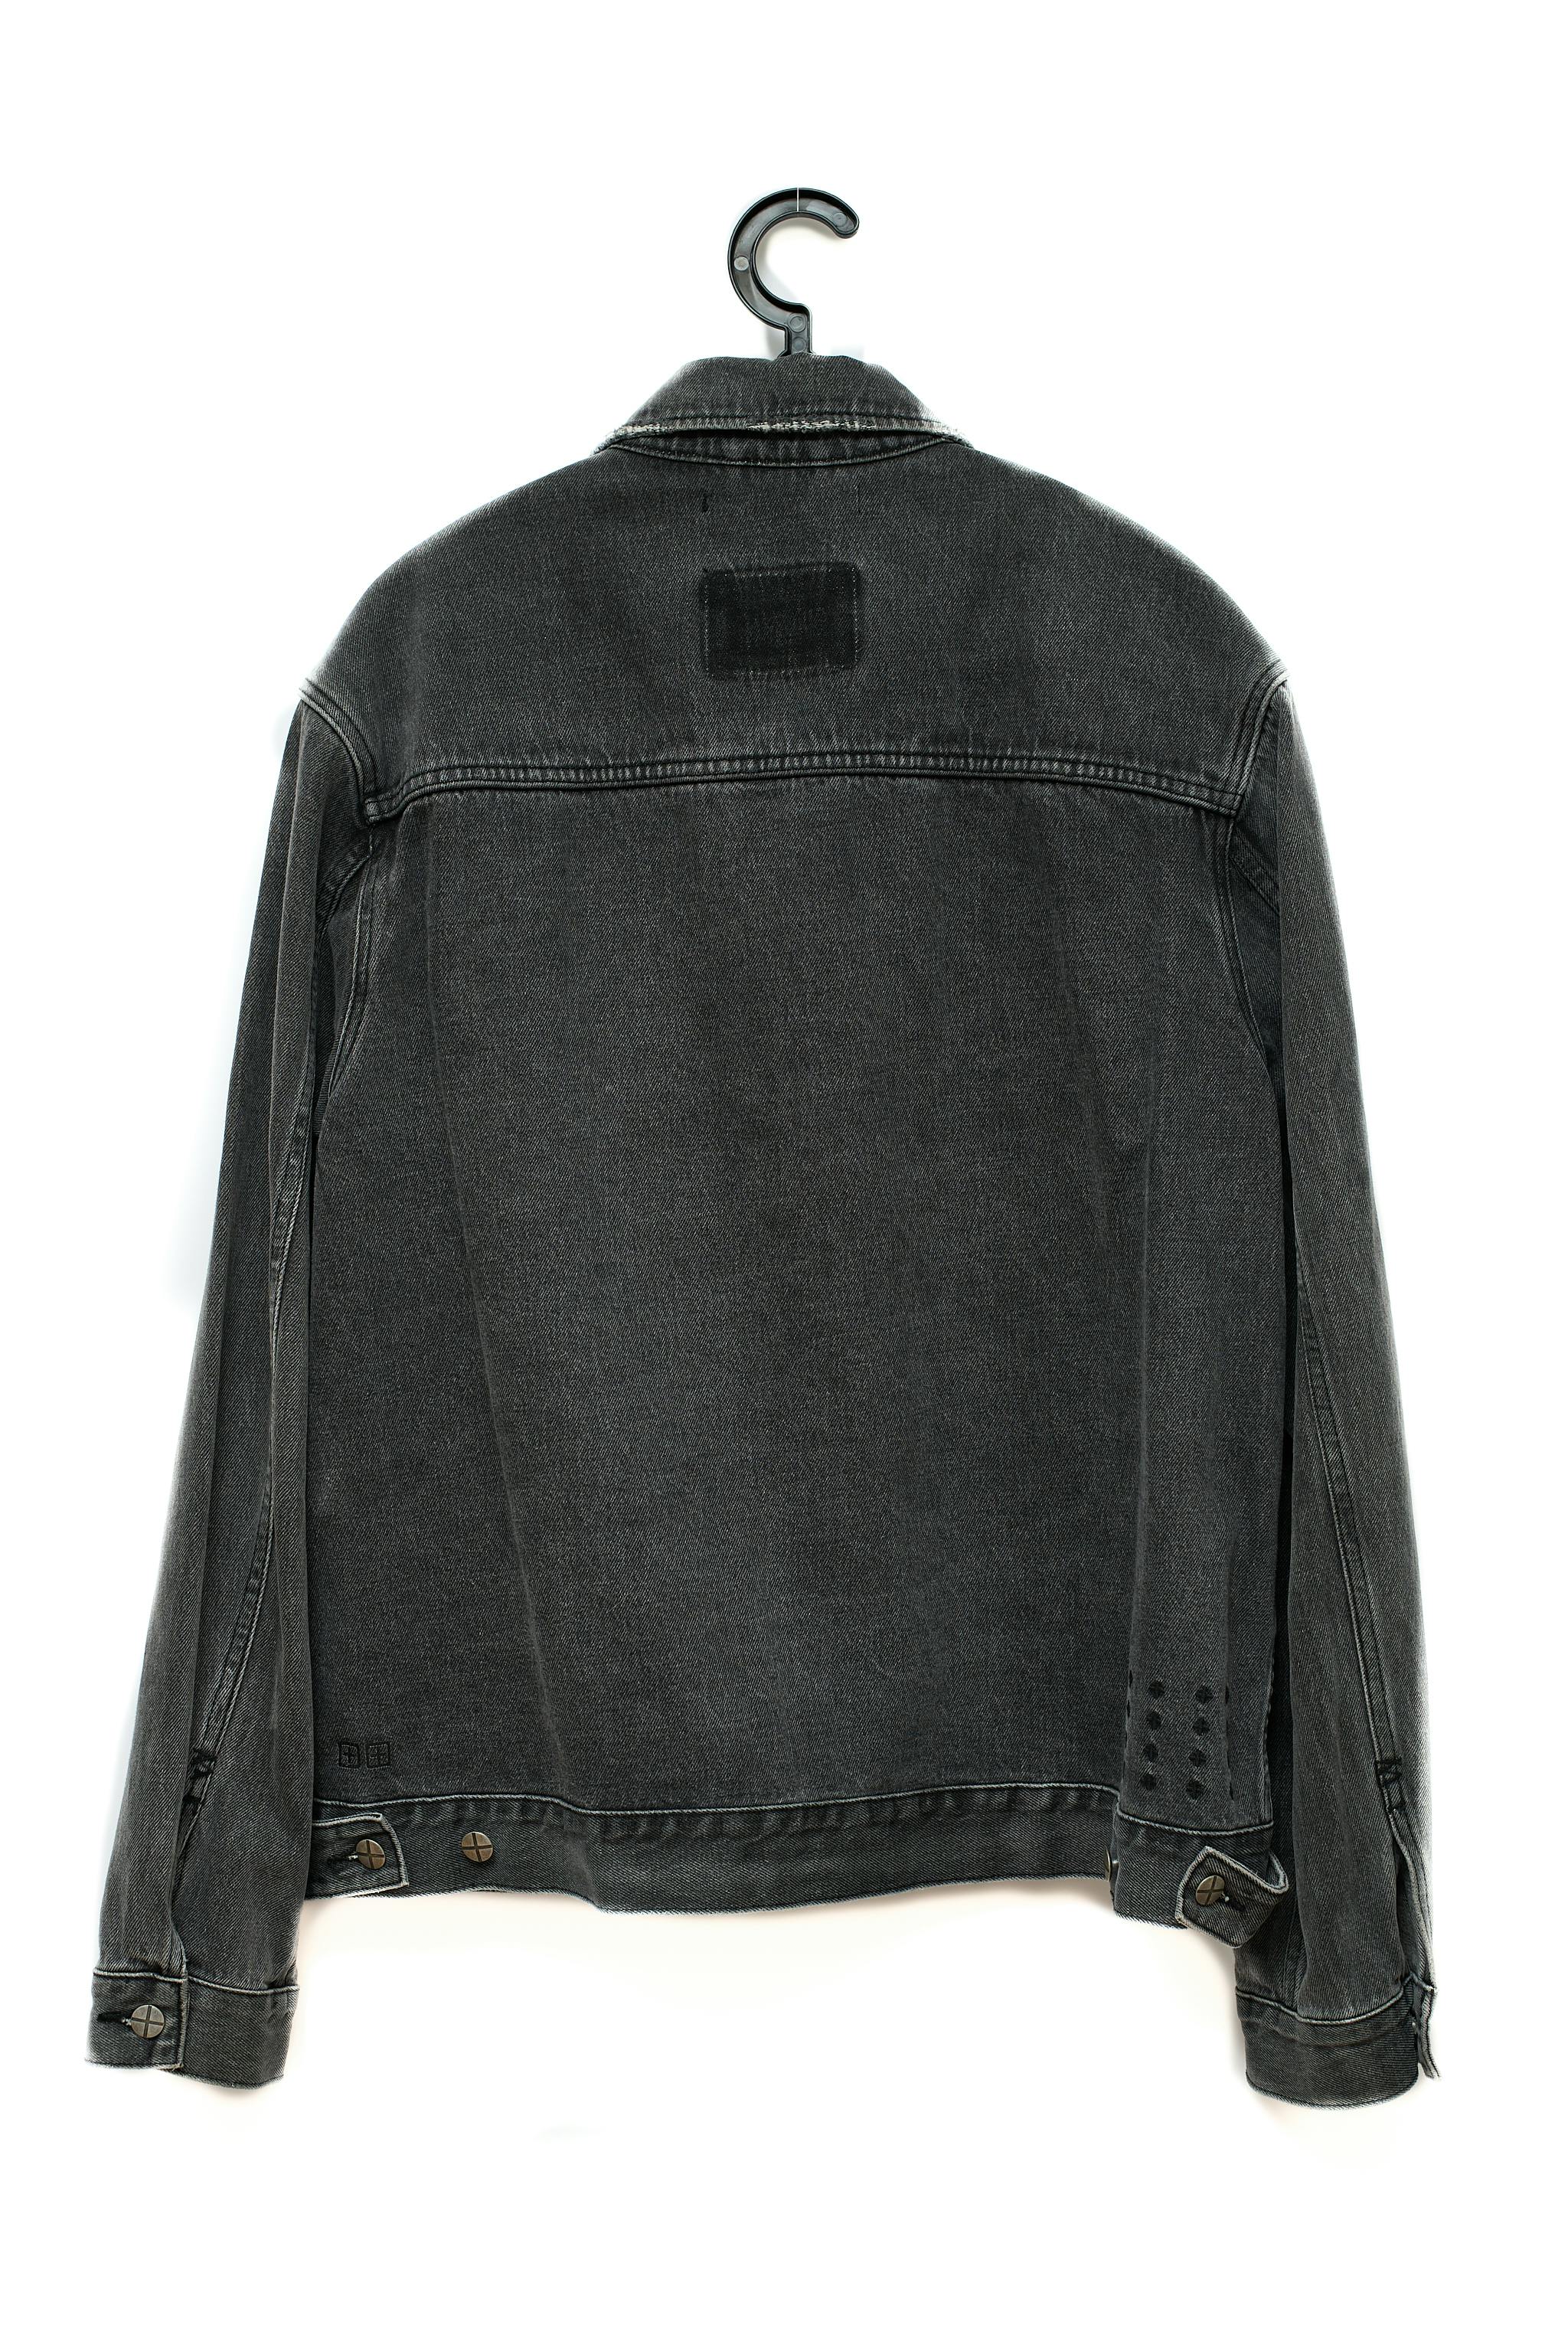 Ksubi Black Denim Jacket Size XL - 2